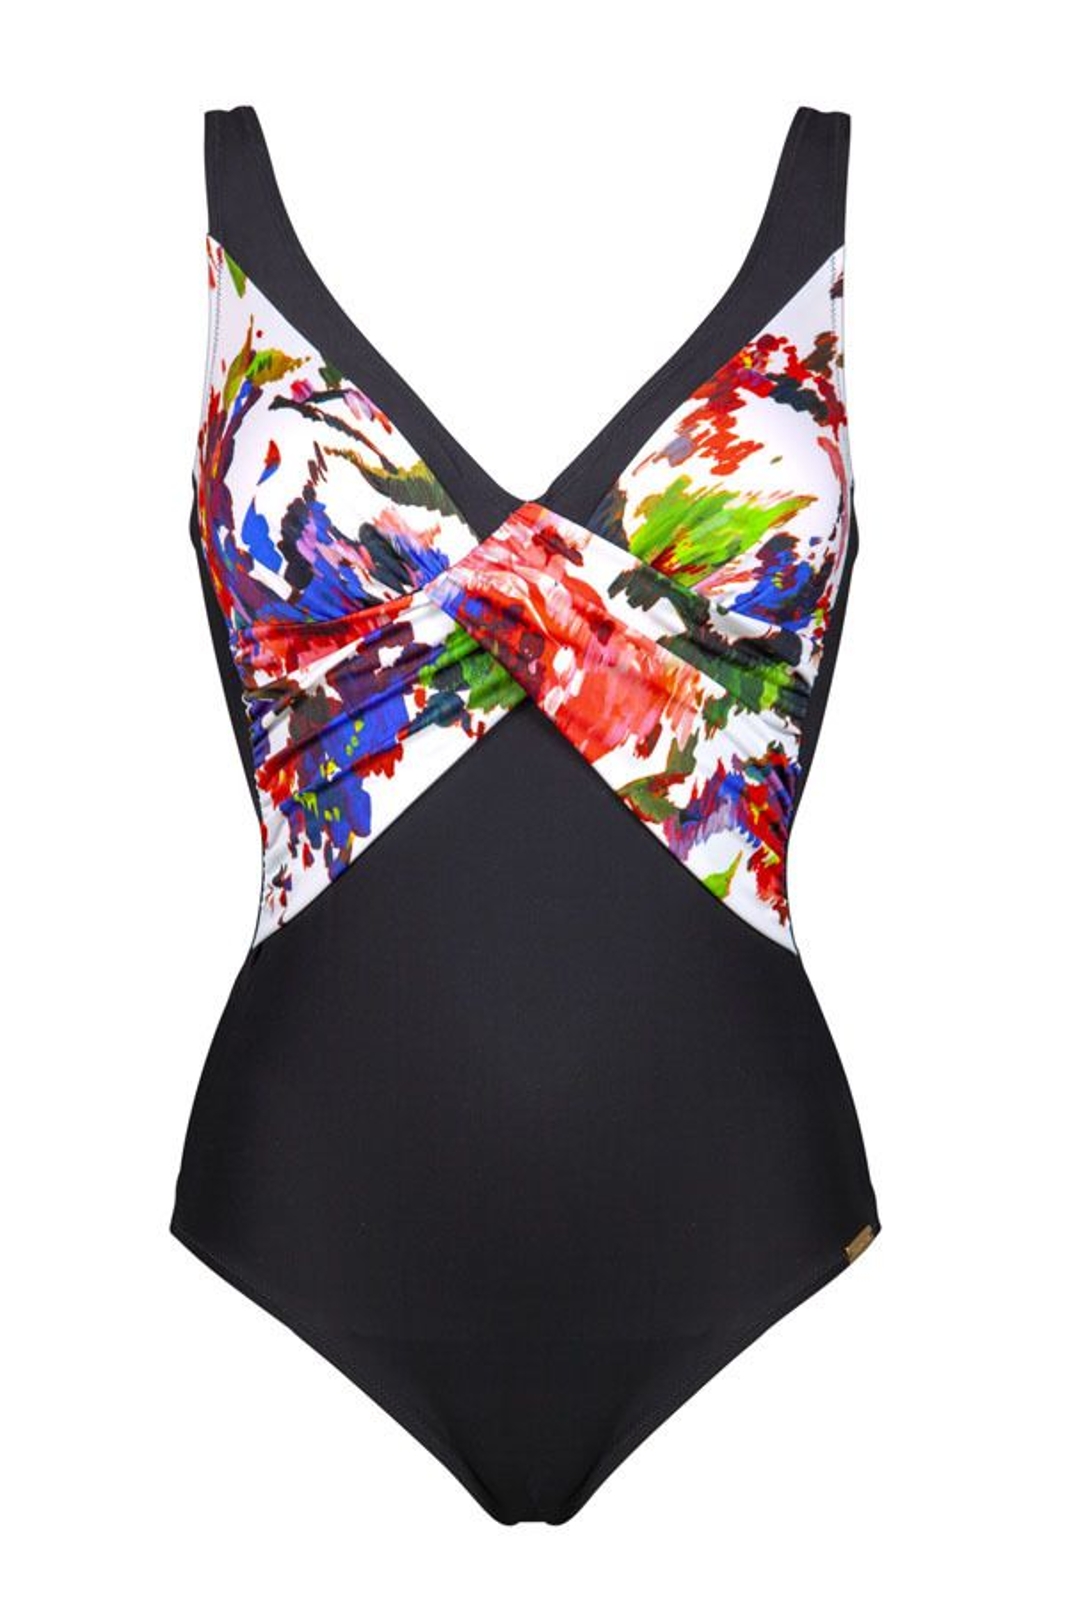 Charmline Black Flower Print Swimsuit - Chantilly Online